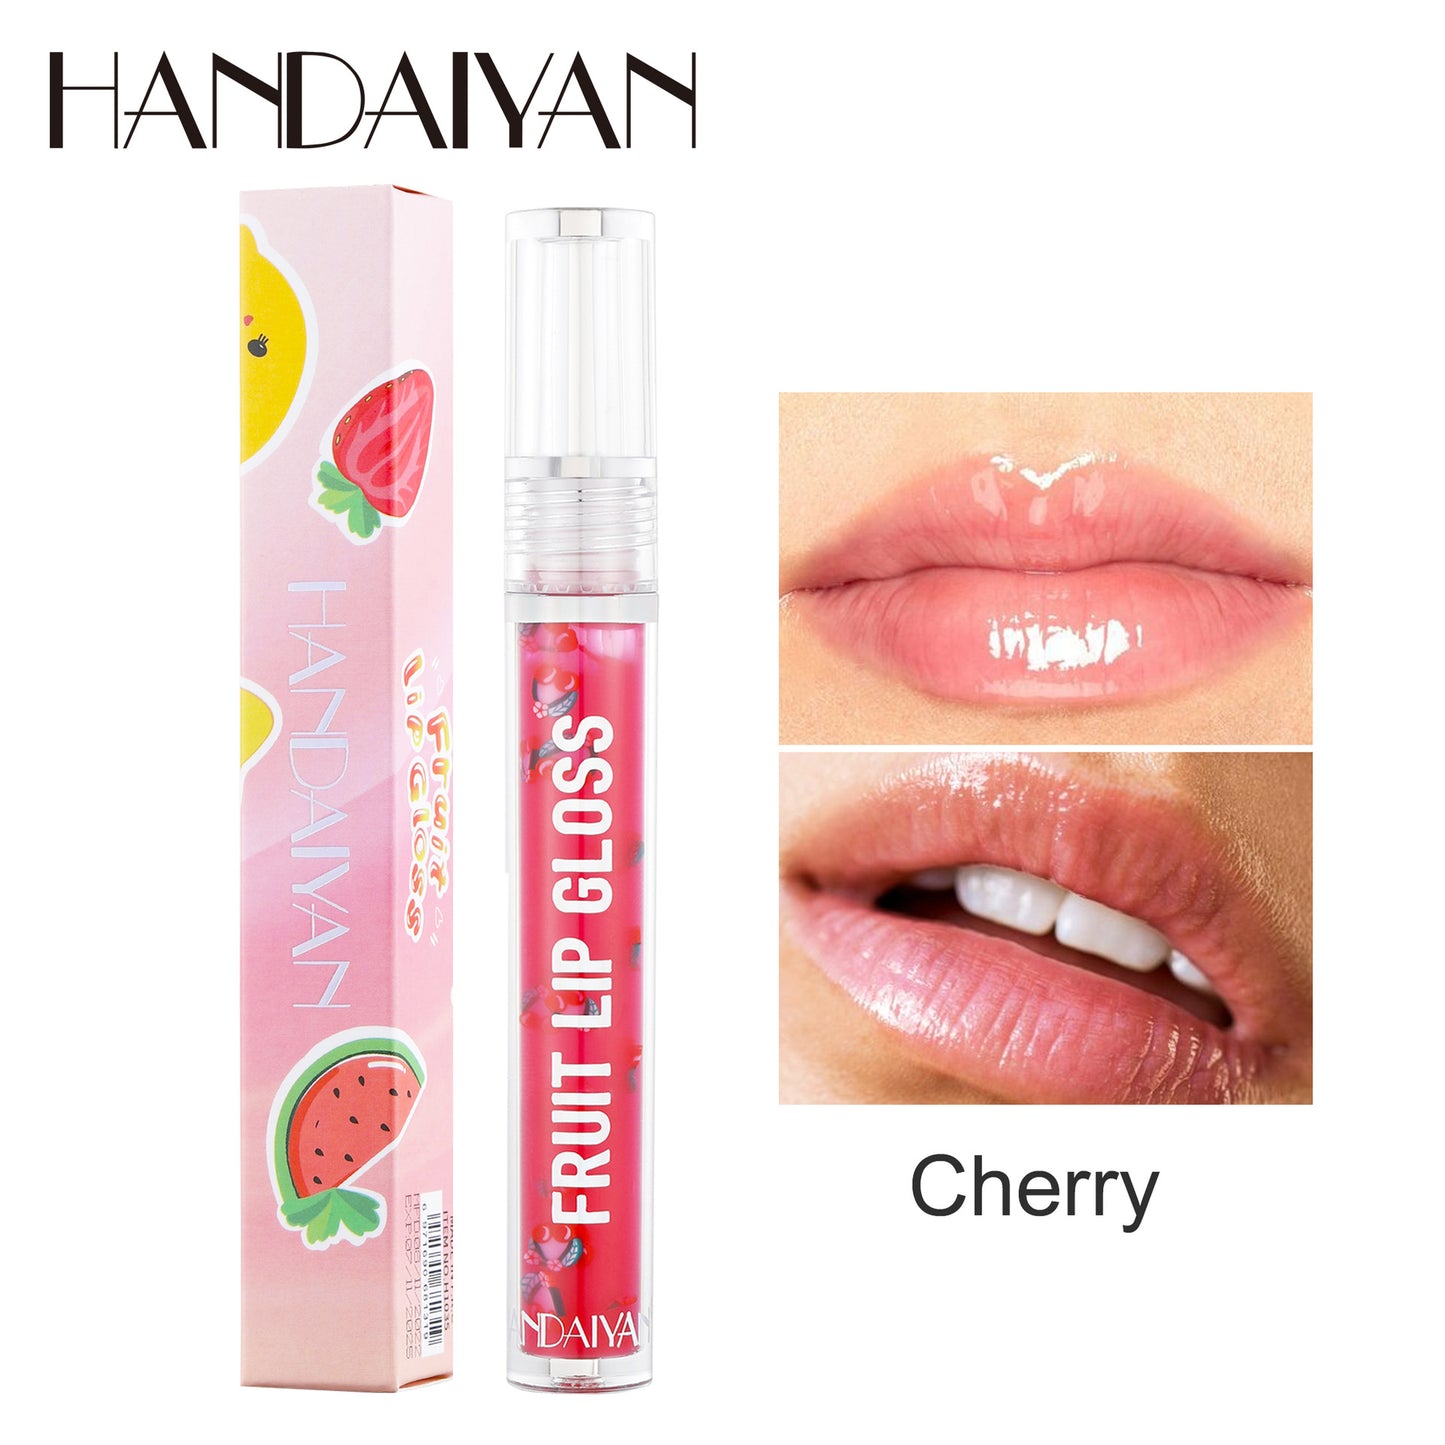 Handaiyan fruit lip gloss